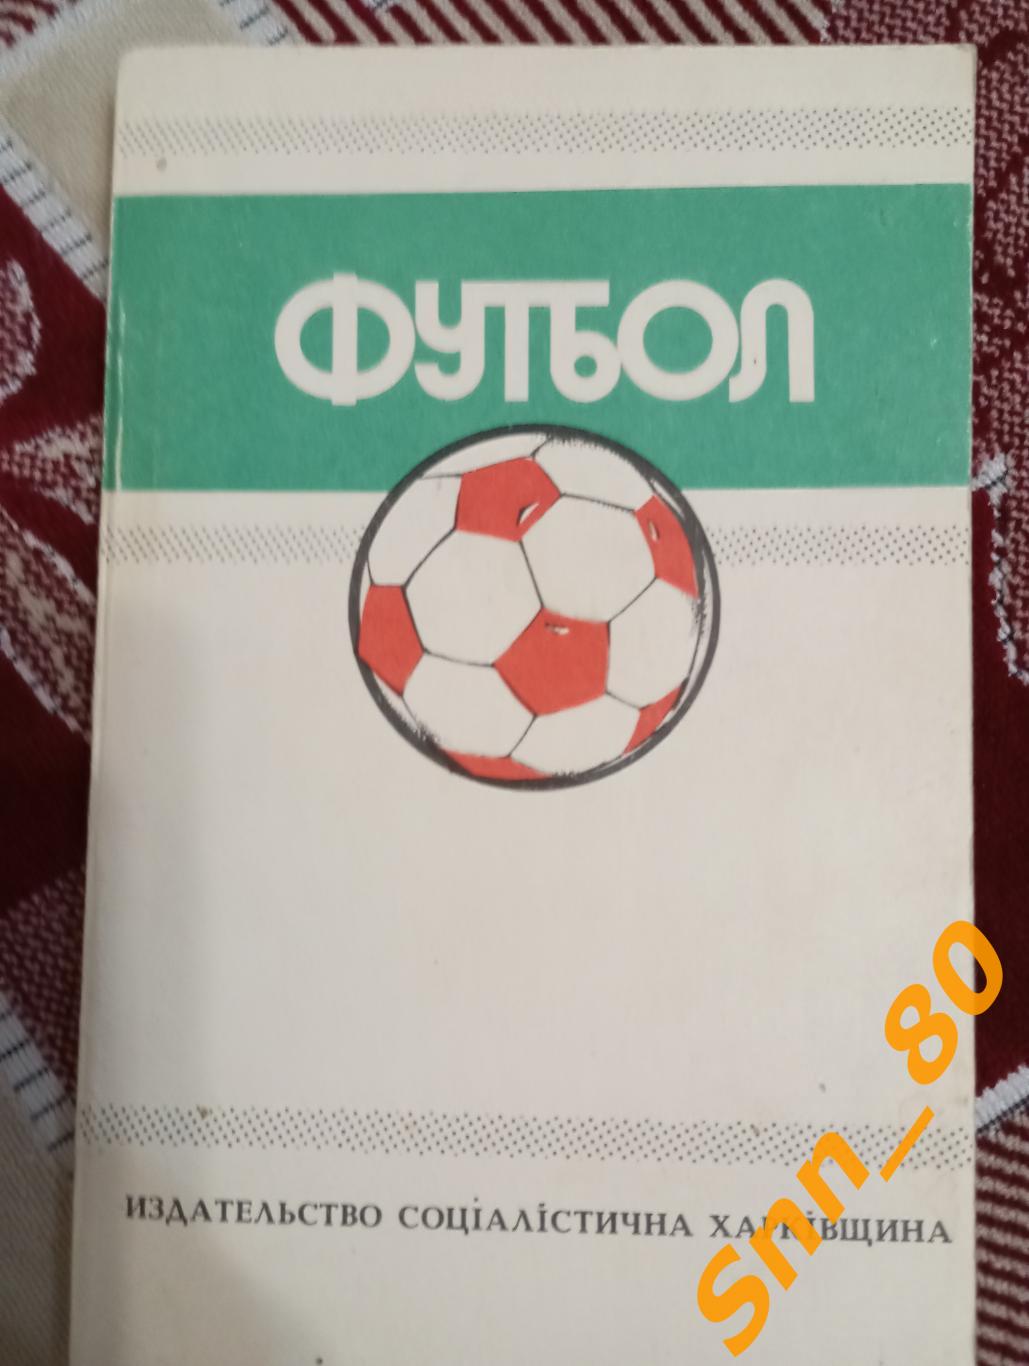 Футбол Календарь-справочник Футбольный календарь Харьков 1989